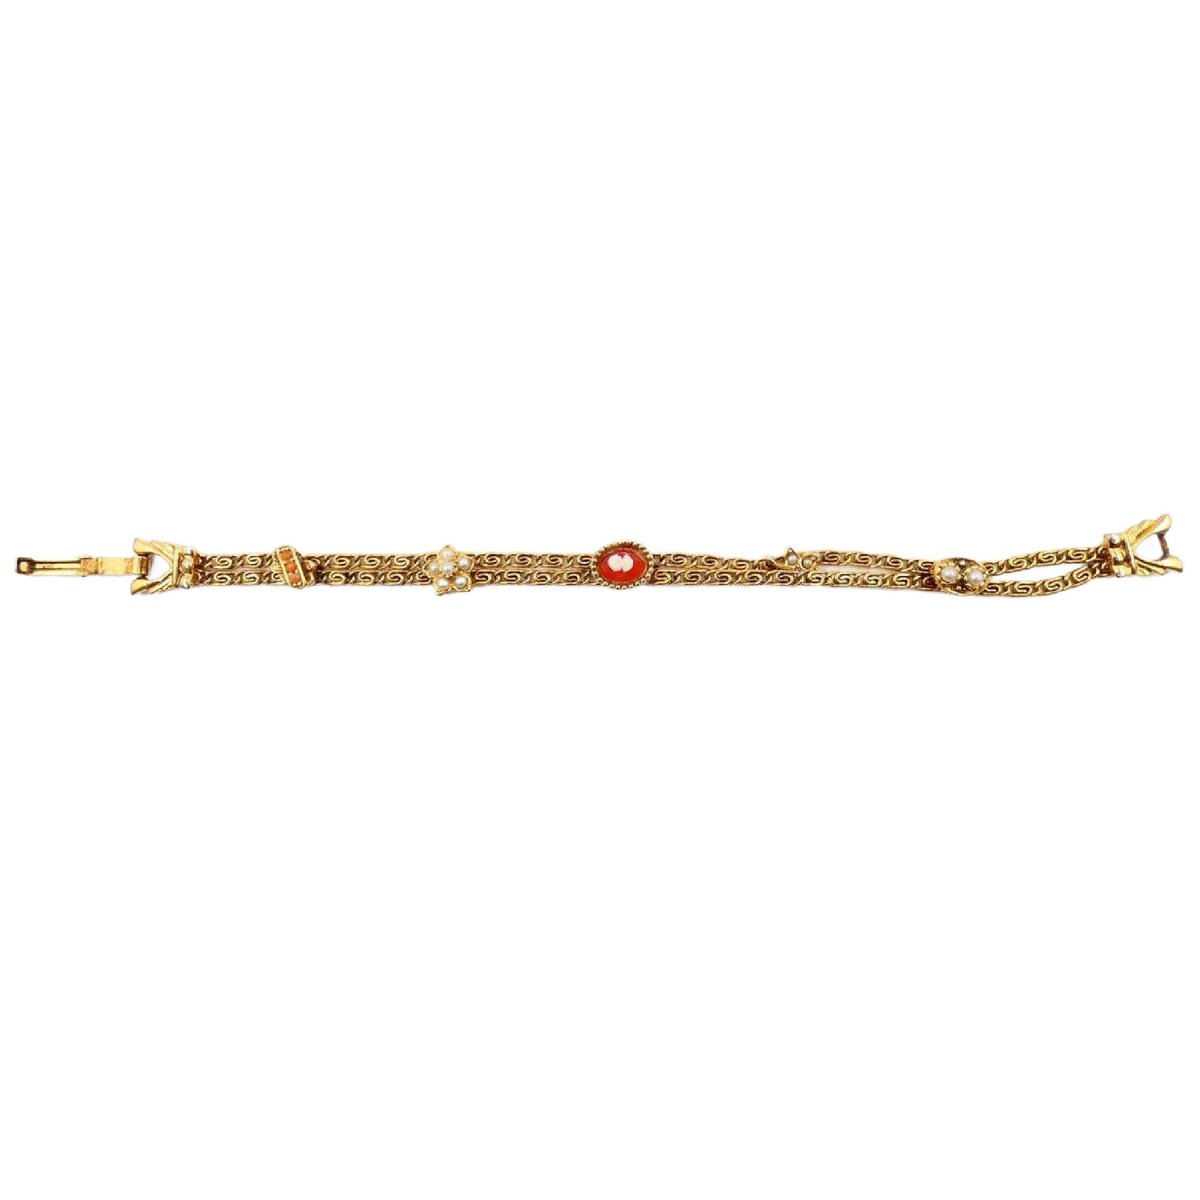 Goldette Victorian Revival Cameo Bracelet, Free Shipping tuppu.net/cfdccc2b #JunkYardBlonde #Etsy #VictorianJewelry